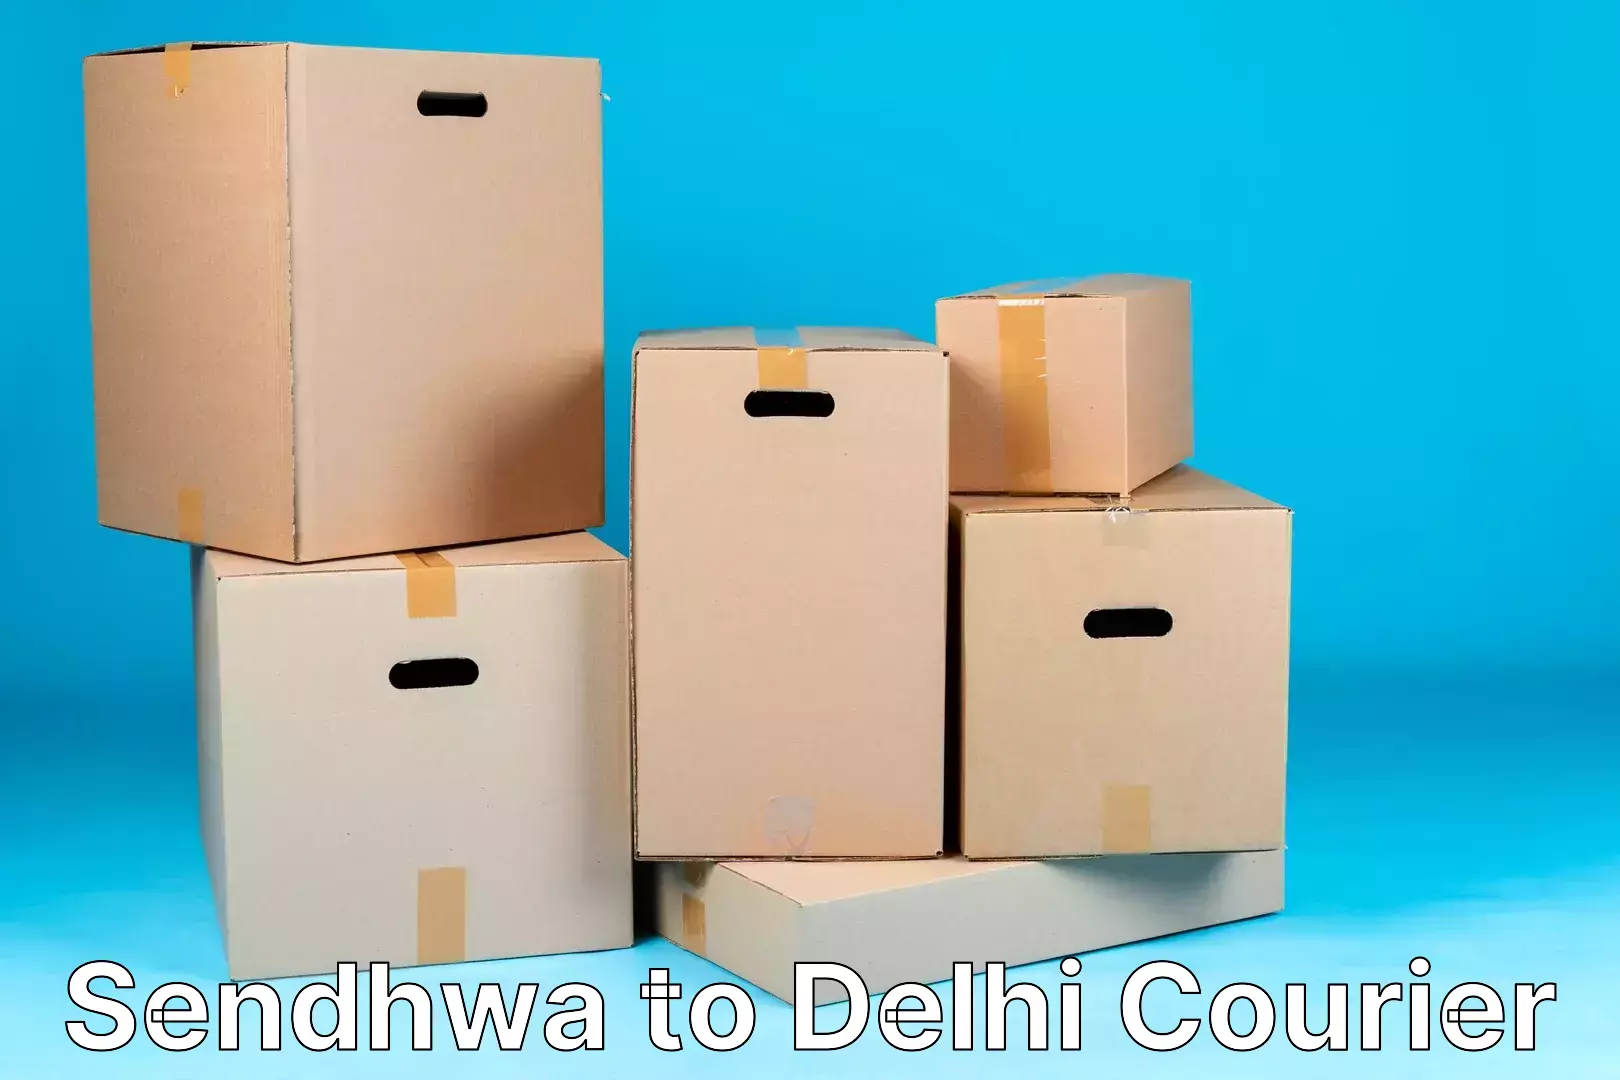 Luggage shipment specialists Sendhwa to Delhi